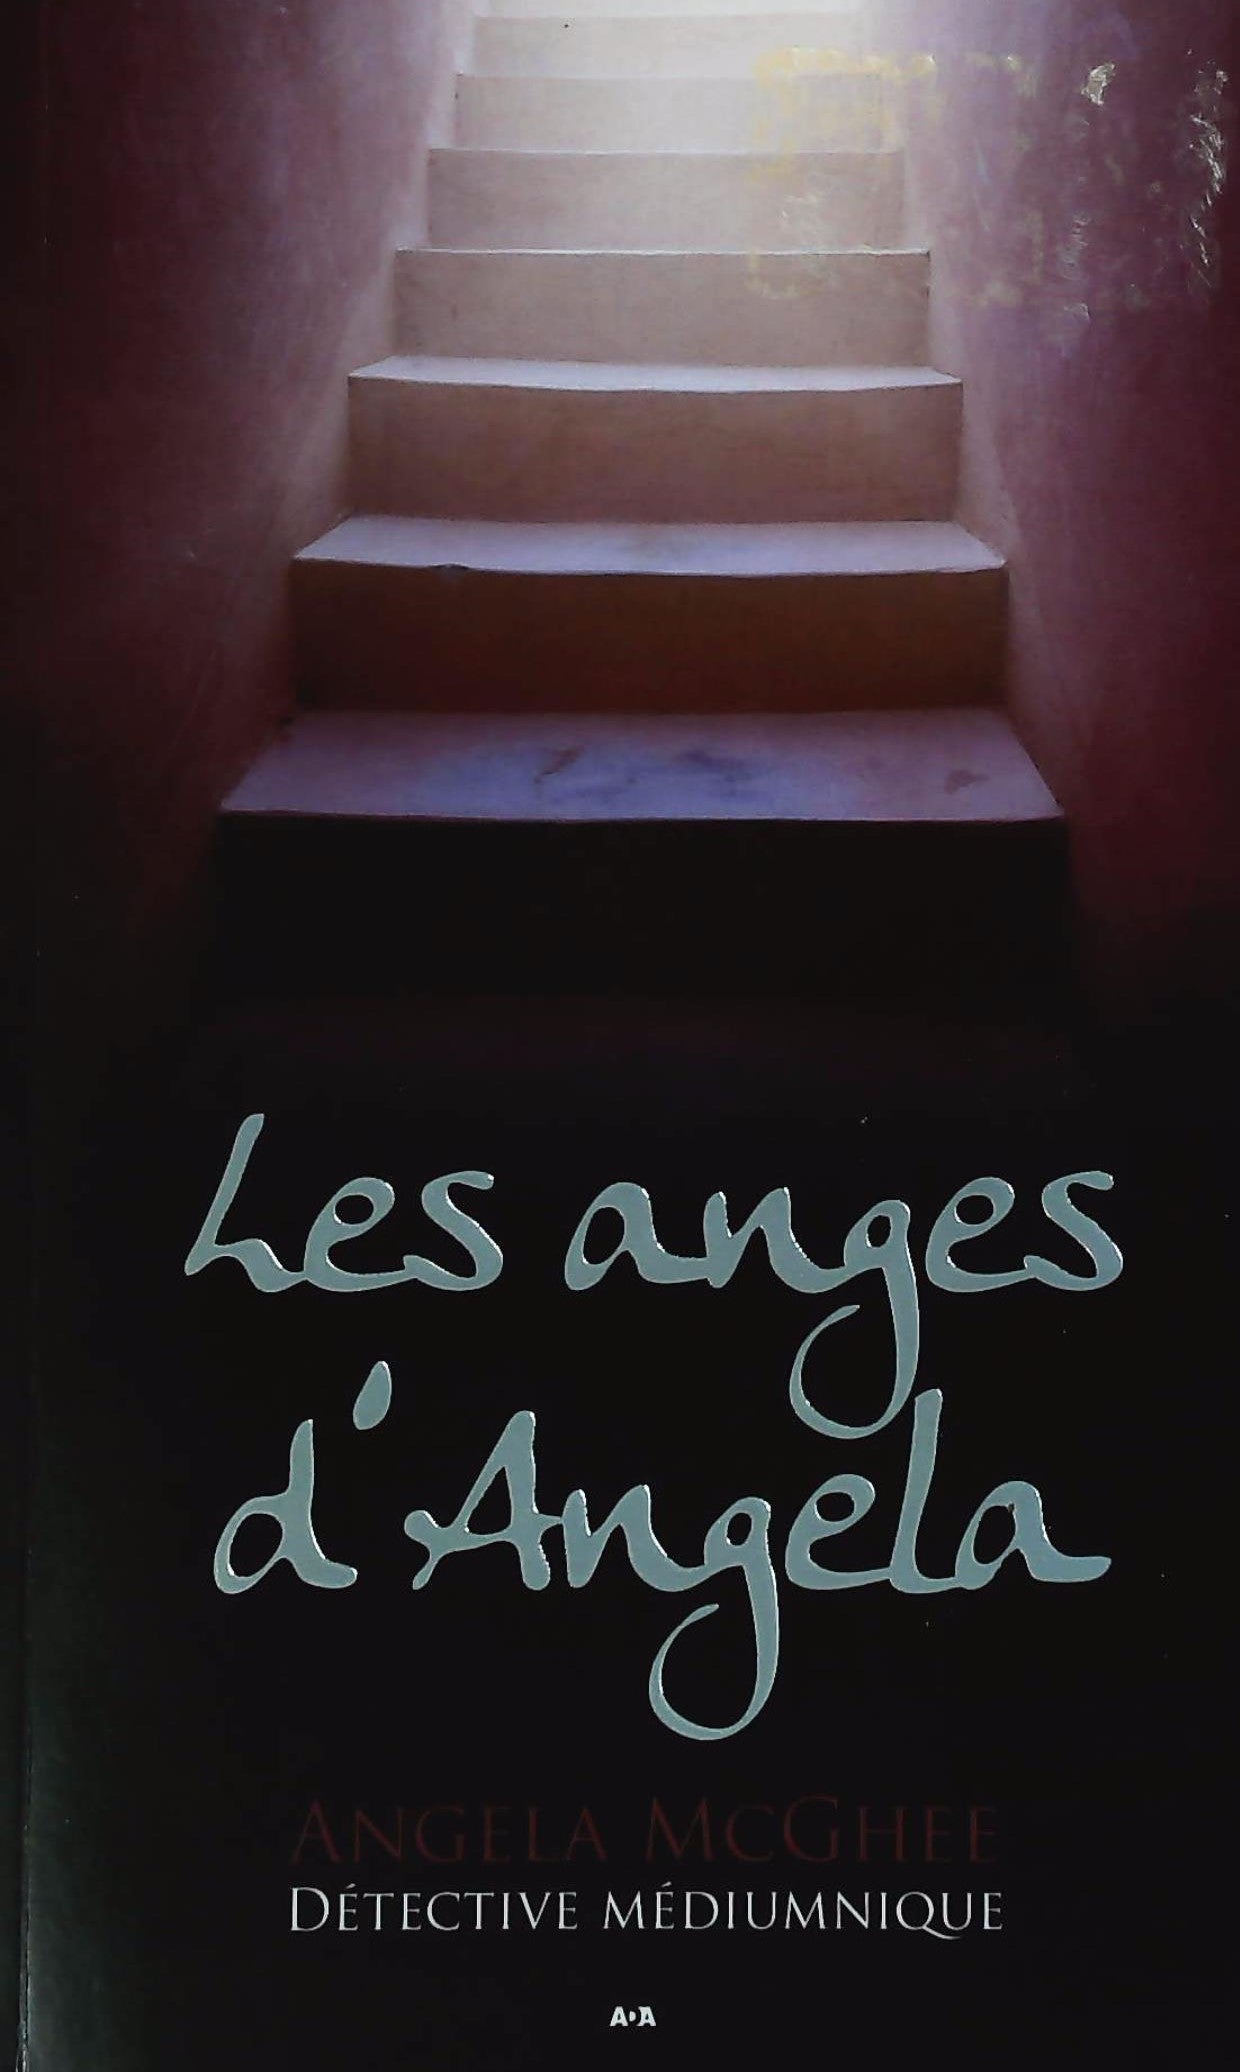 Livre ISBN 2896673180 Les anges d'Angela (Angela McGhee)